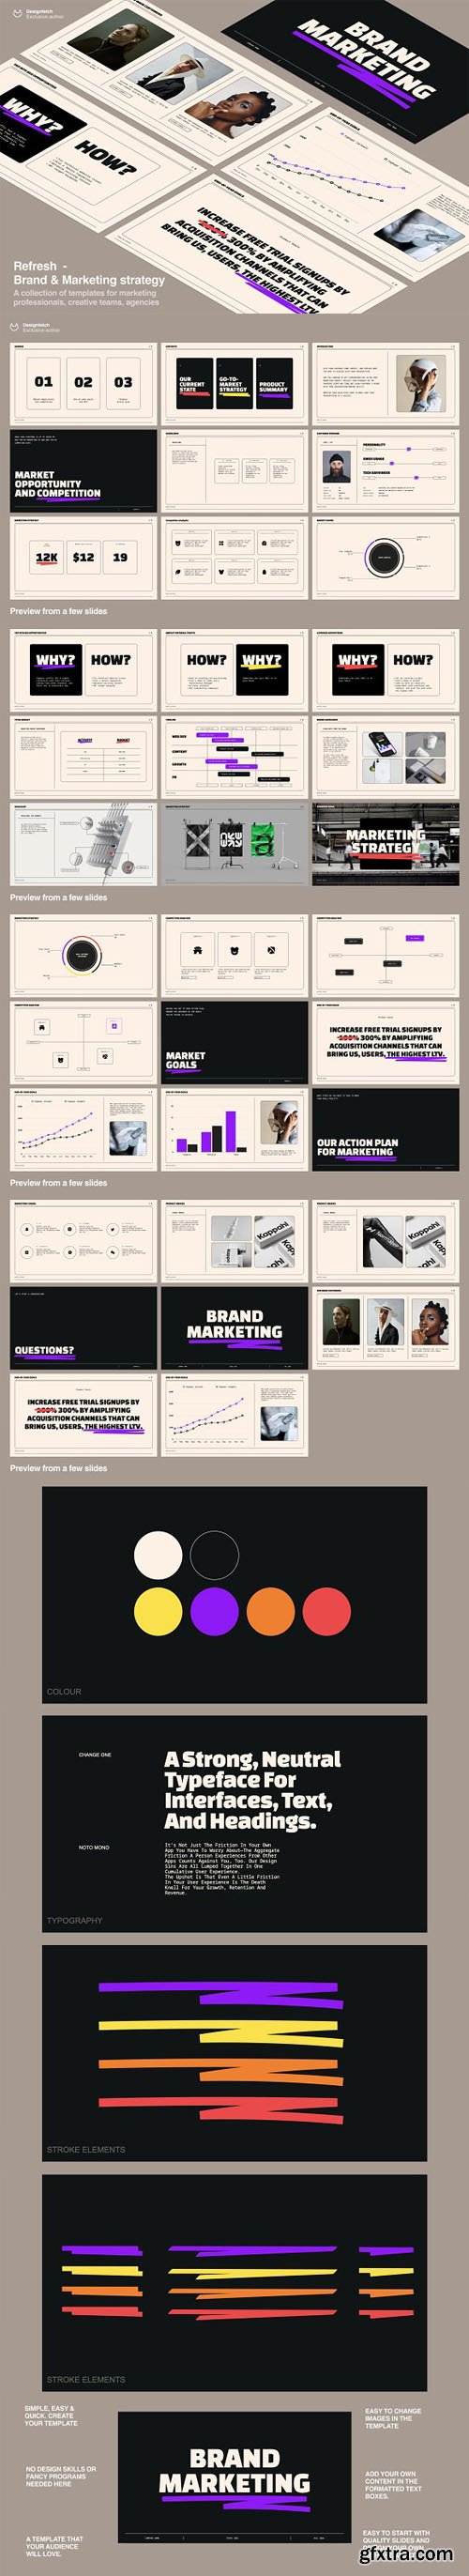 Refresh - Brand & Marketing Strategy - PowerPoint & Keynote Presentation Template